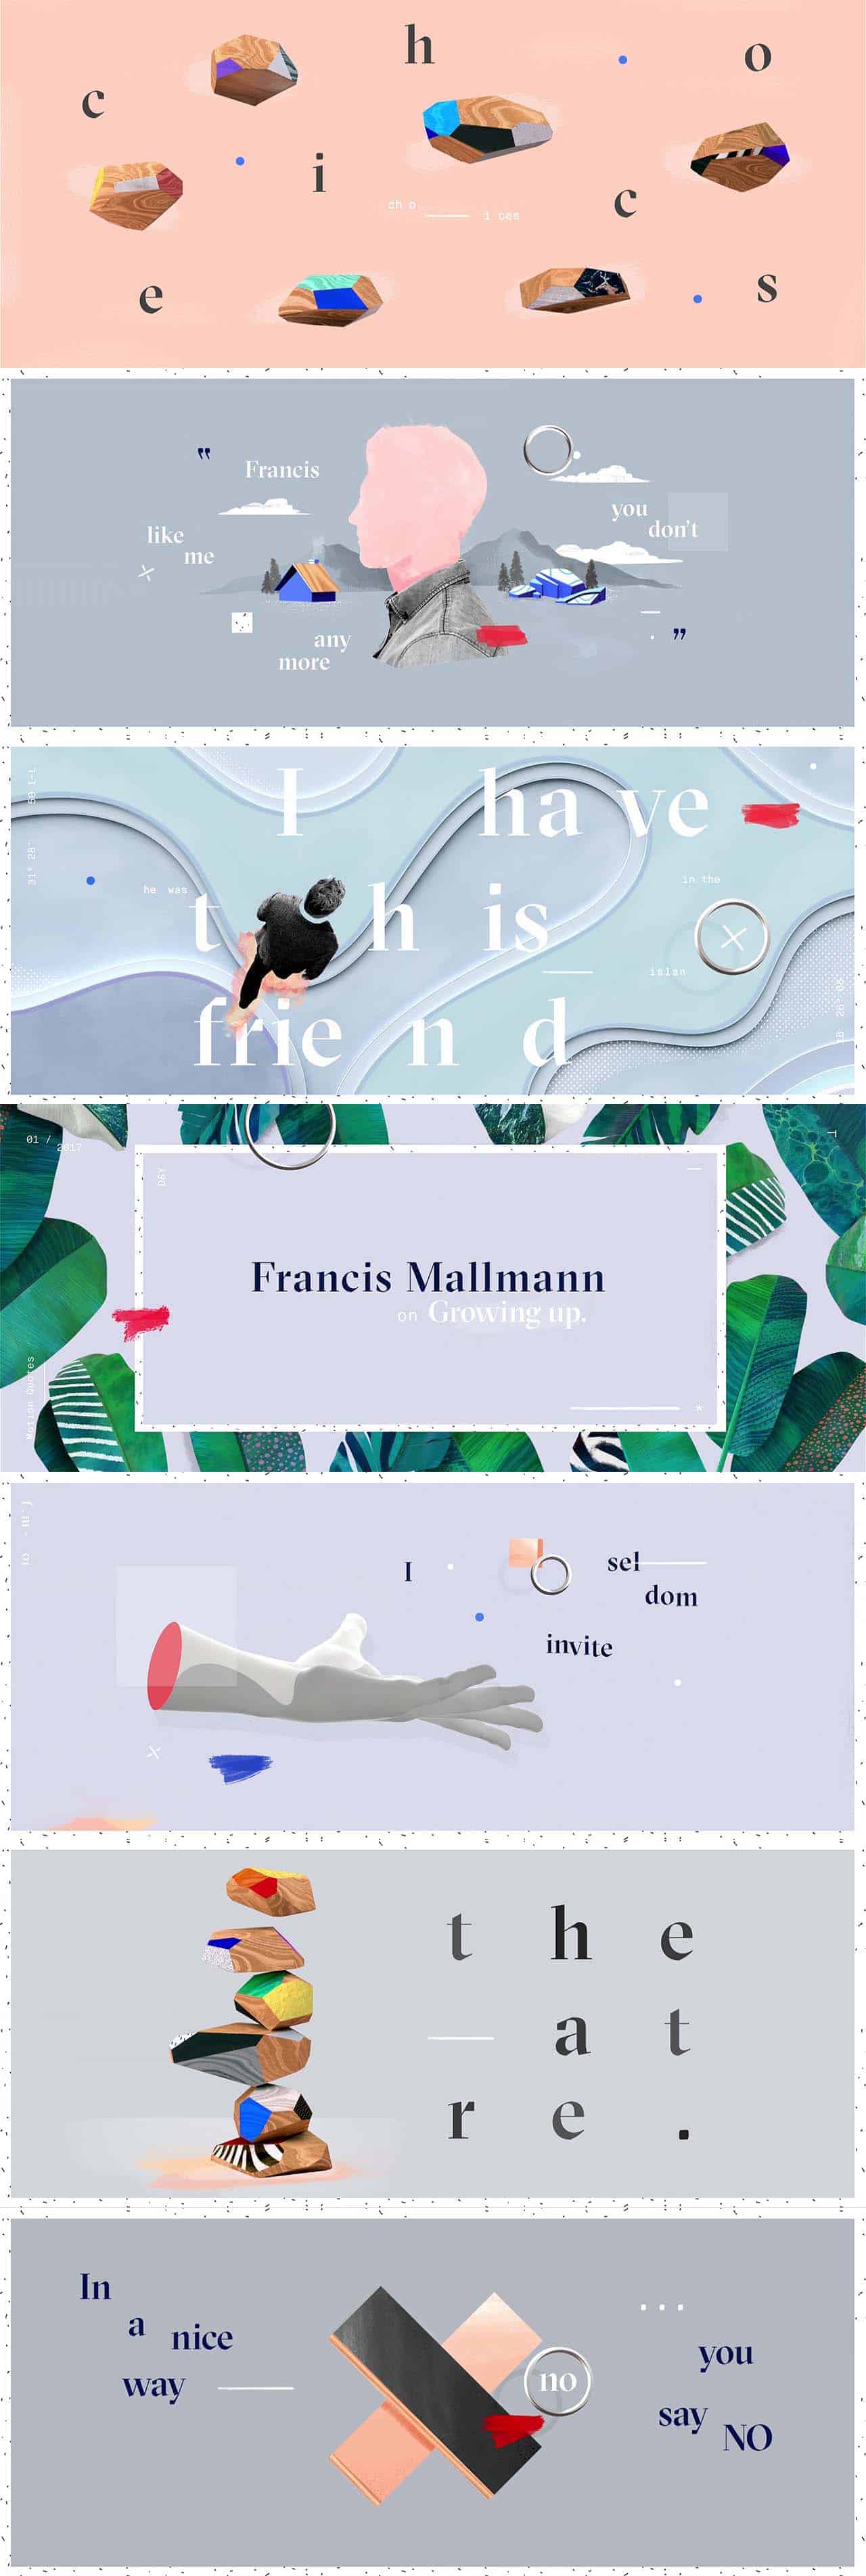 Francis Mallmann on Growing Up